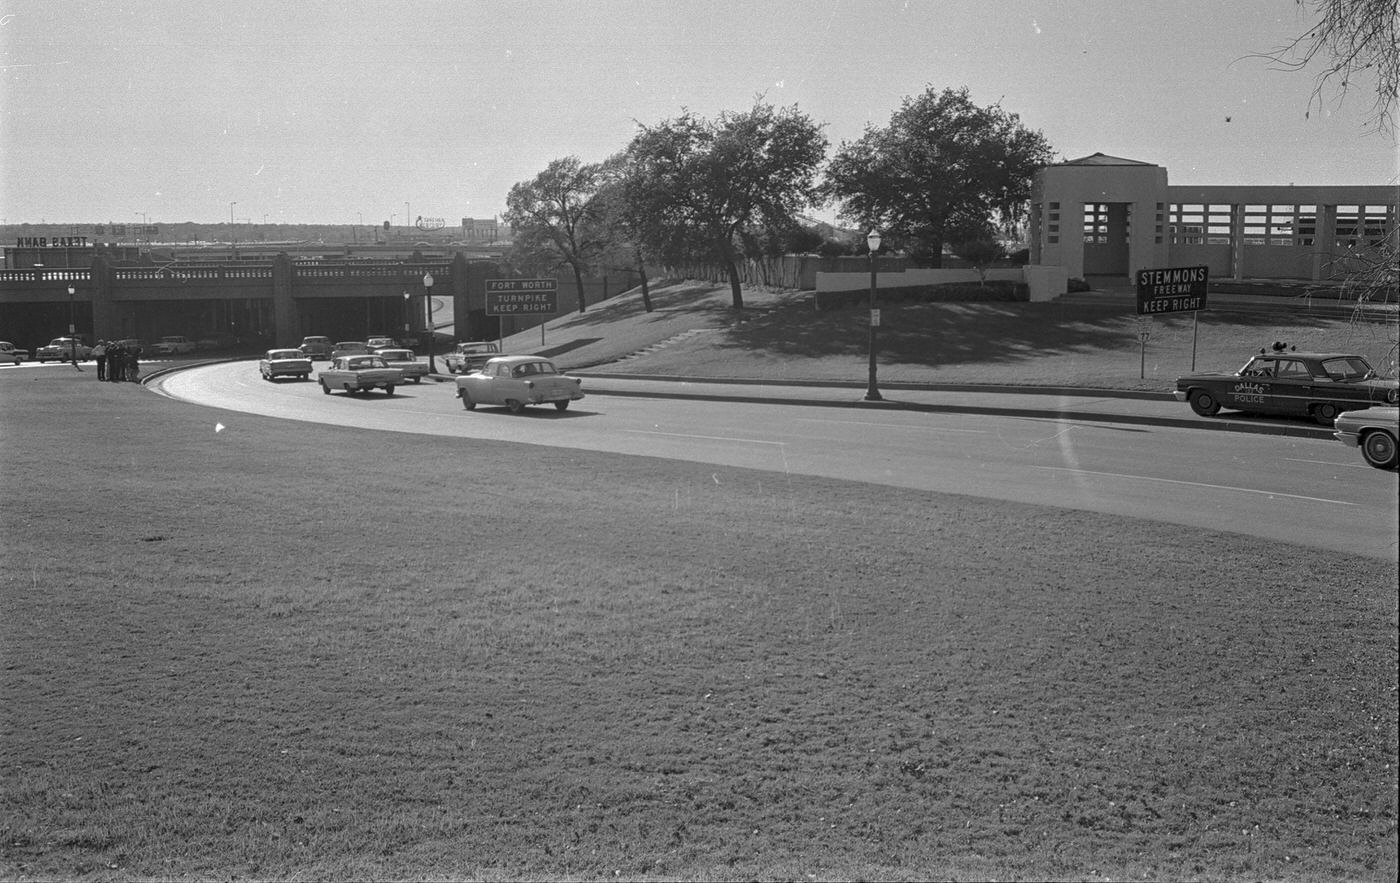 "Grassy Knoll" near Dealey Plaza, Dallas, Texas following President John F. Kennedy's assassination, 1963